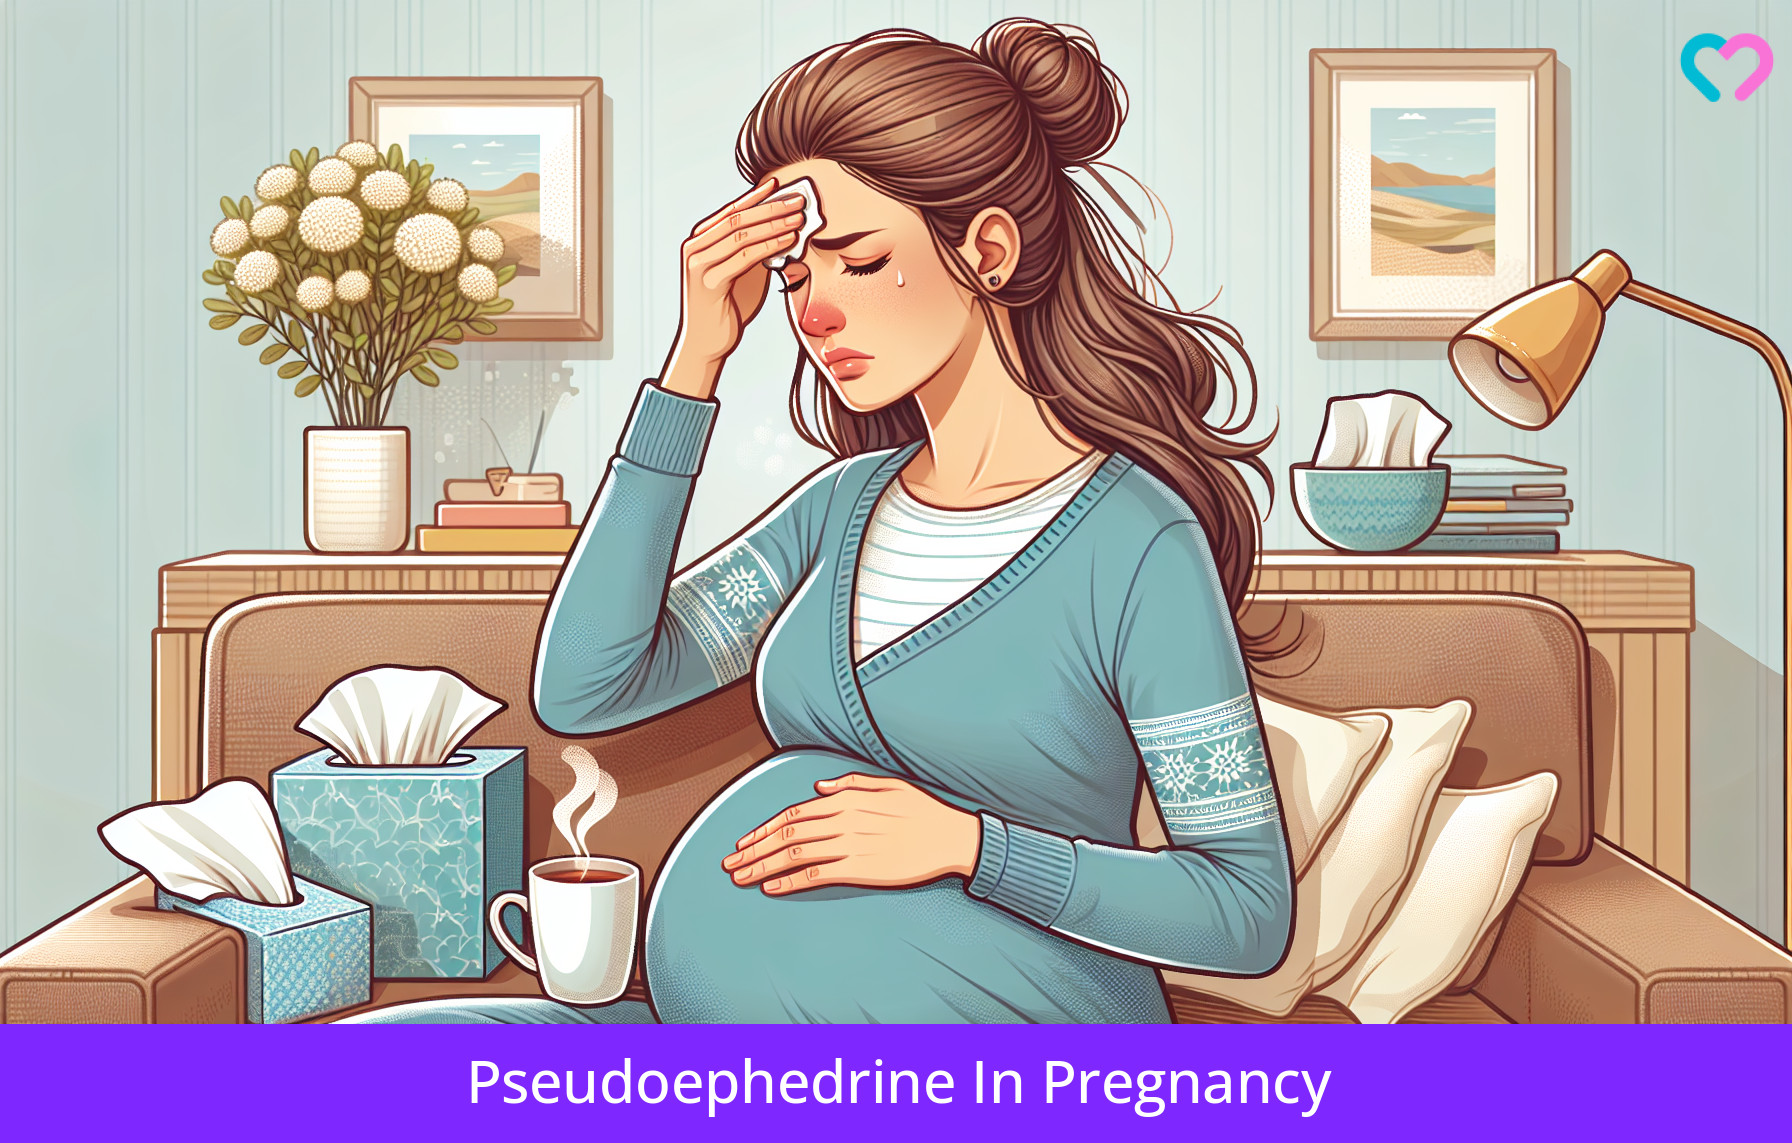 Pseudoephedrine In Pregnancy_illustration